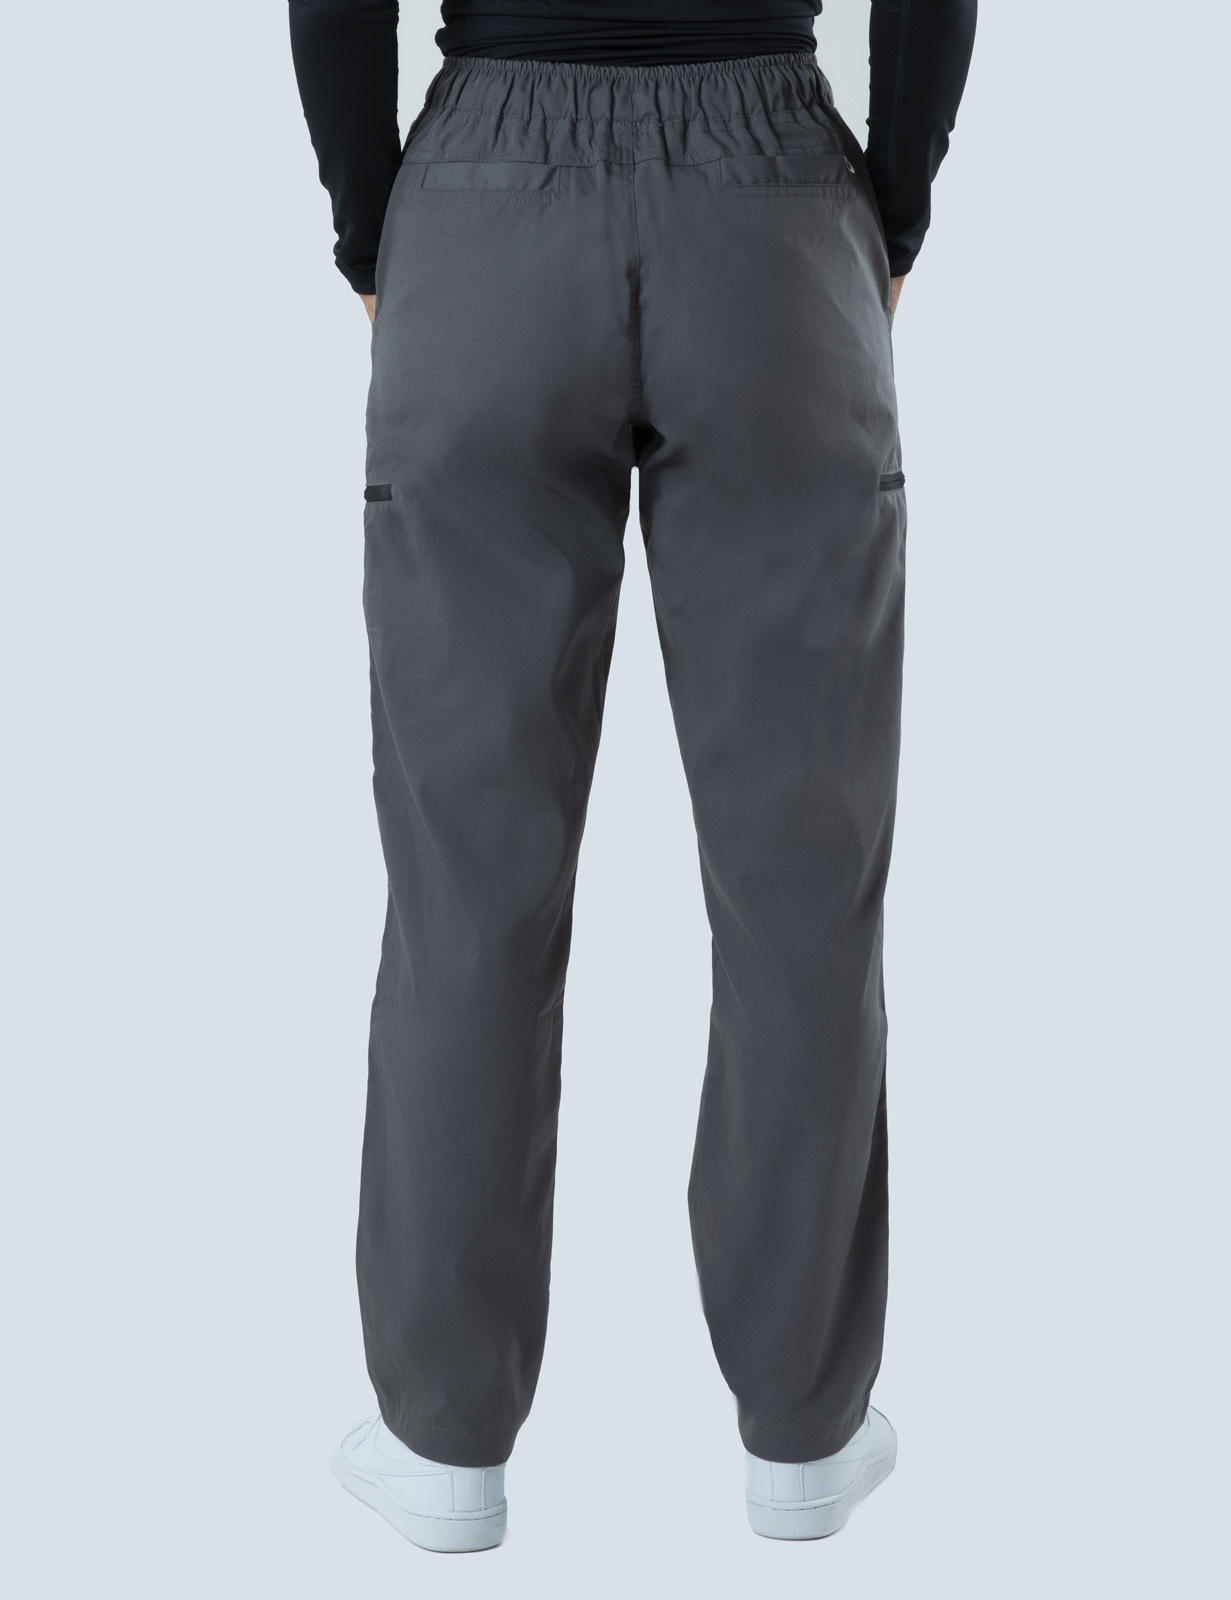 Women's Utility Pants - Steel Grey - XX Small